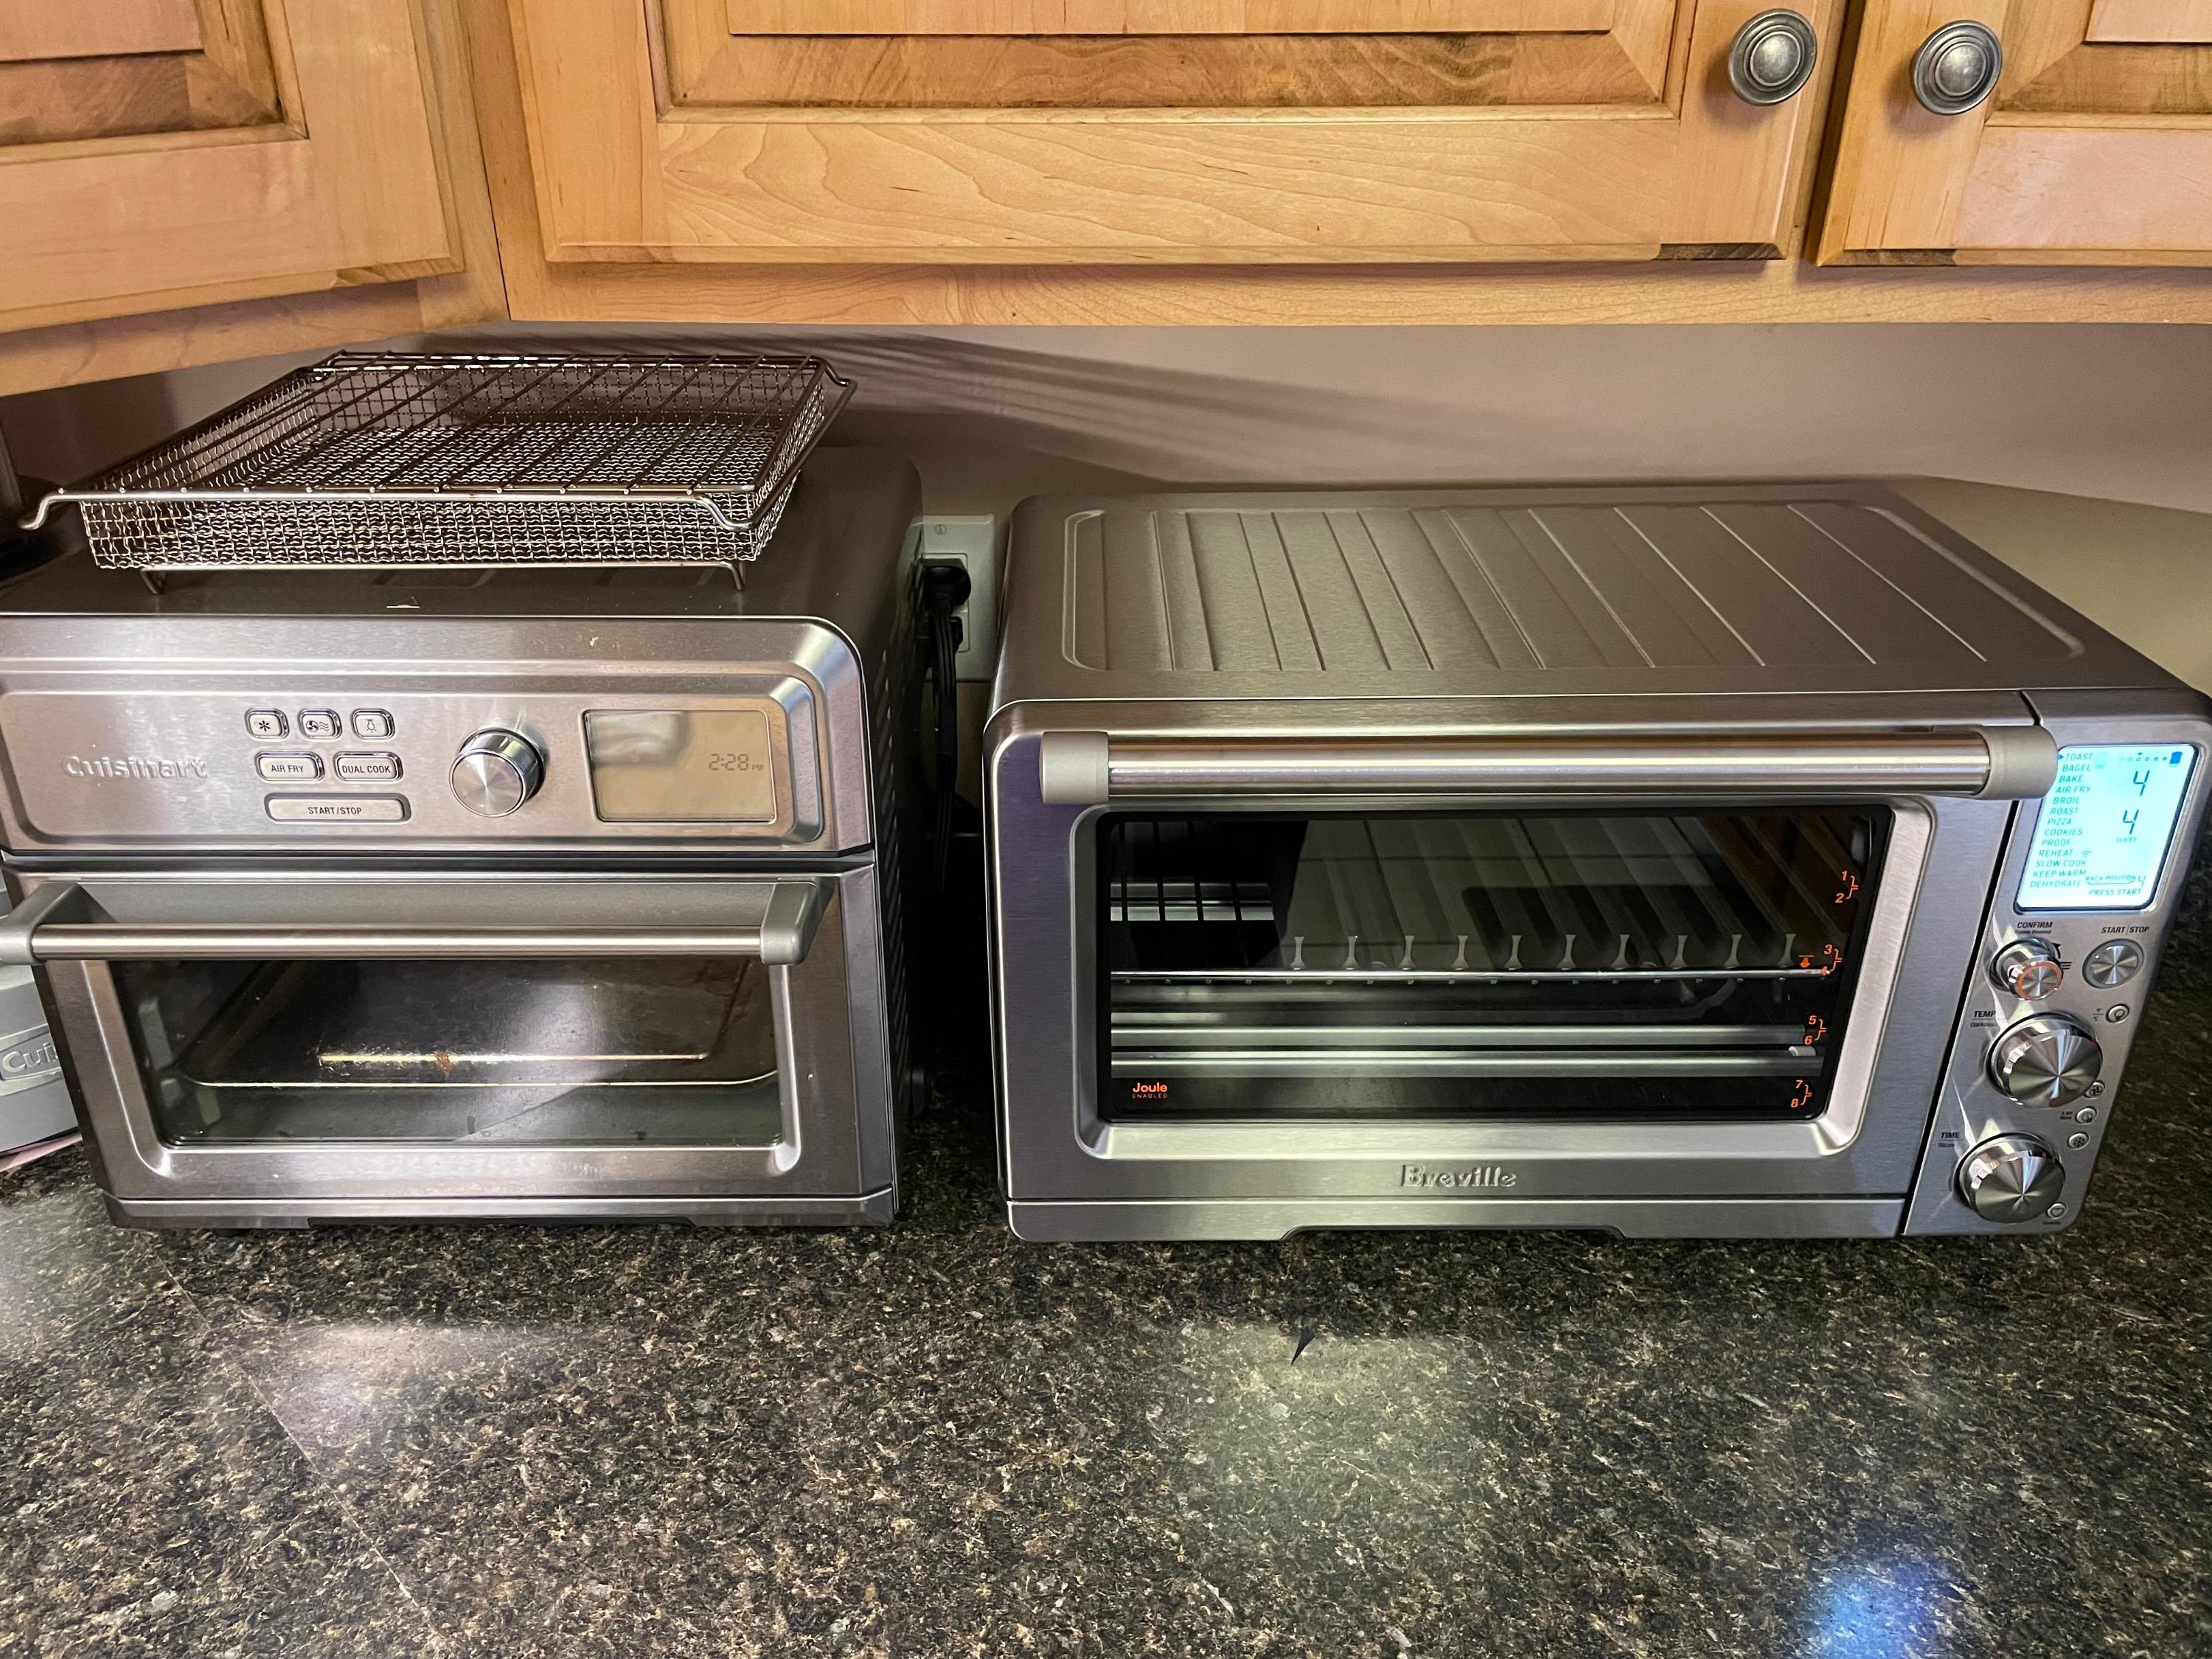 Joule Oven Air Fryer Pro - Kitchen Consumer - eGullet Forums